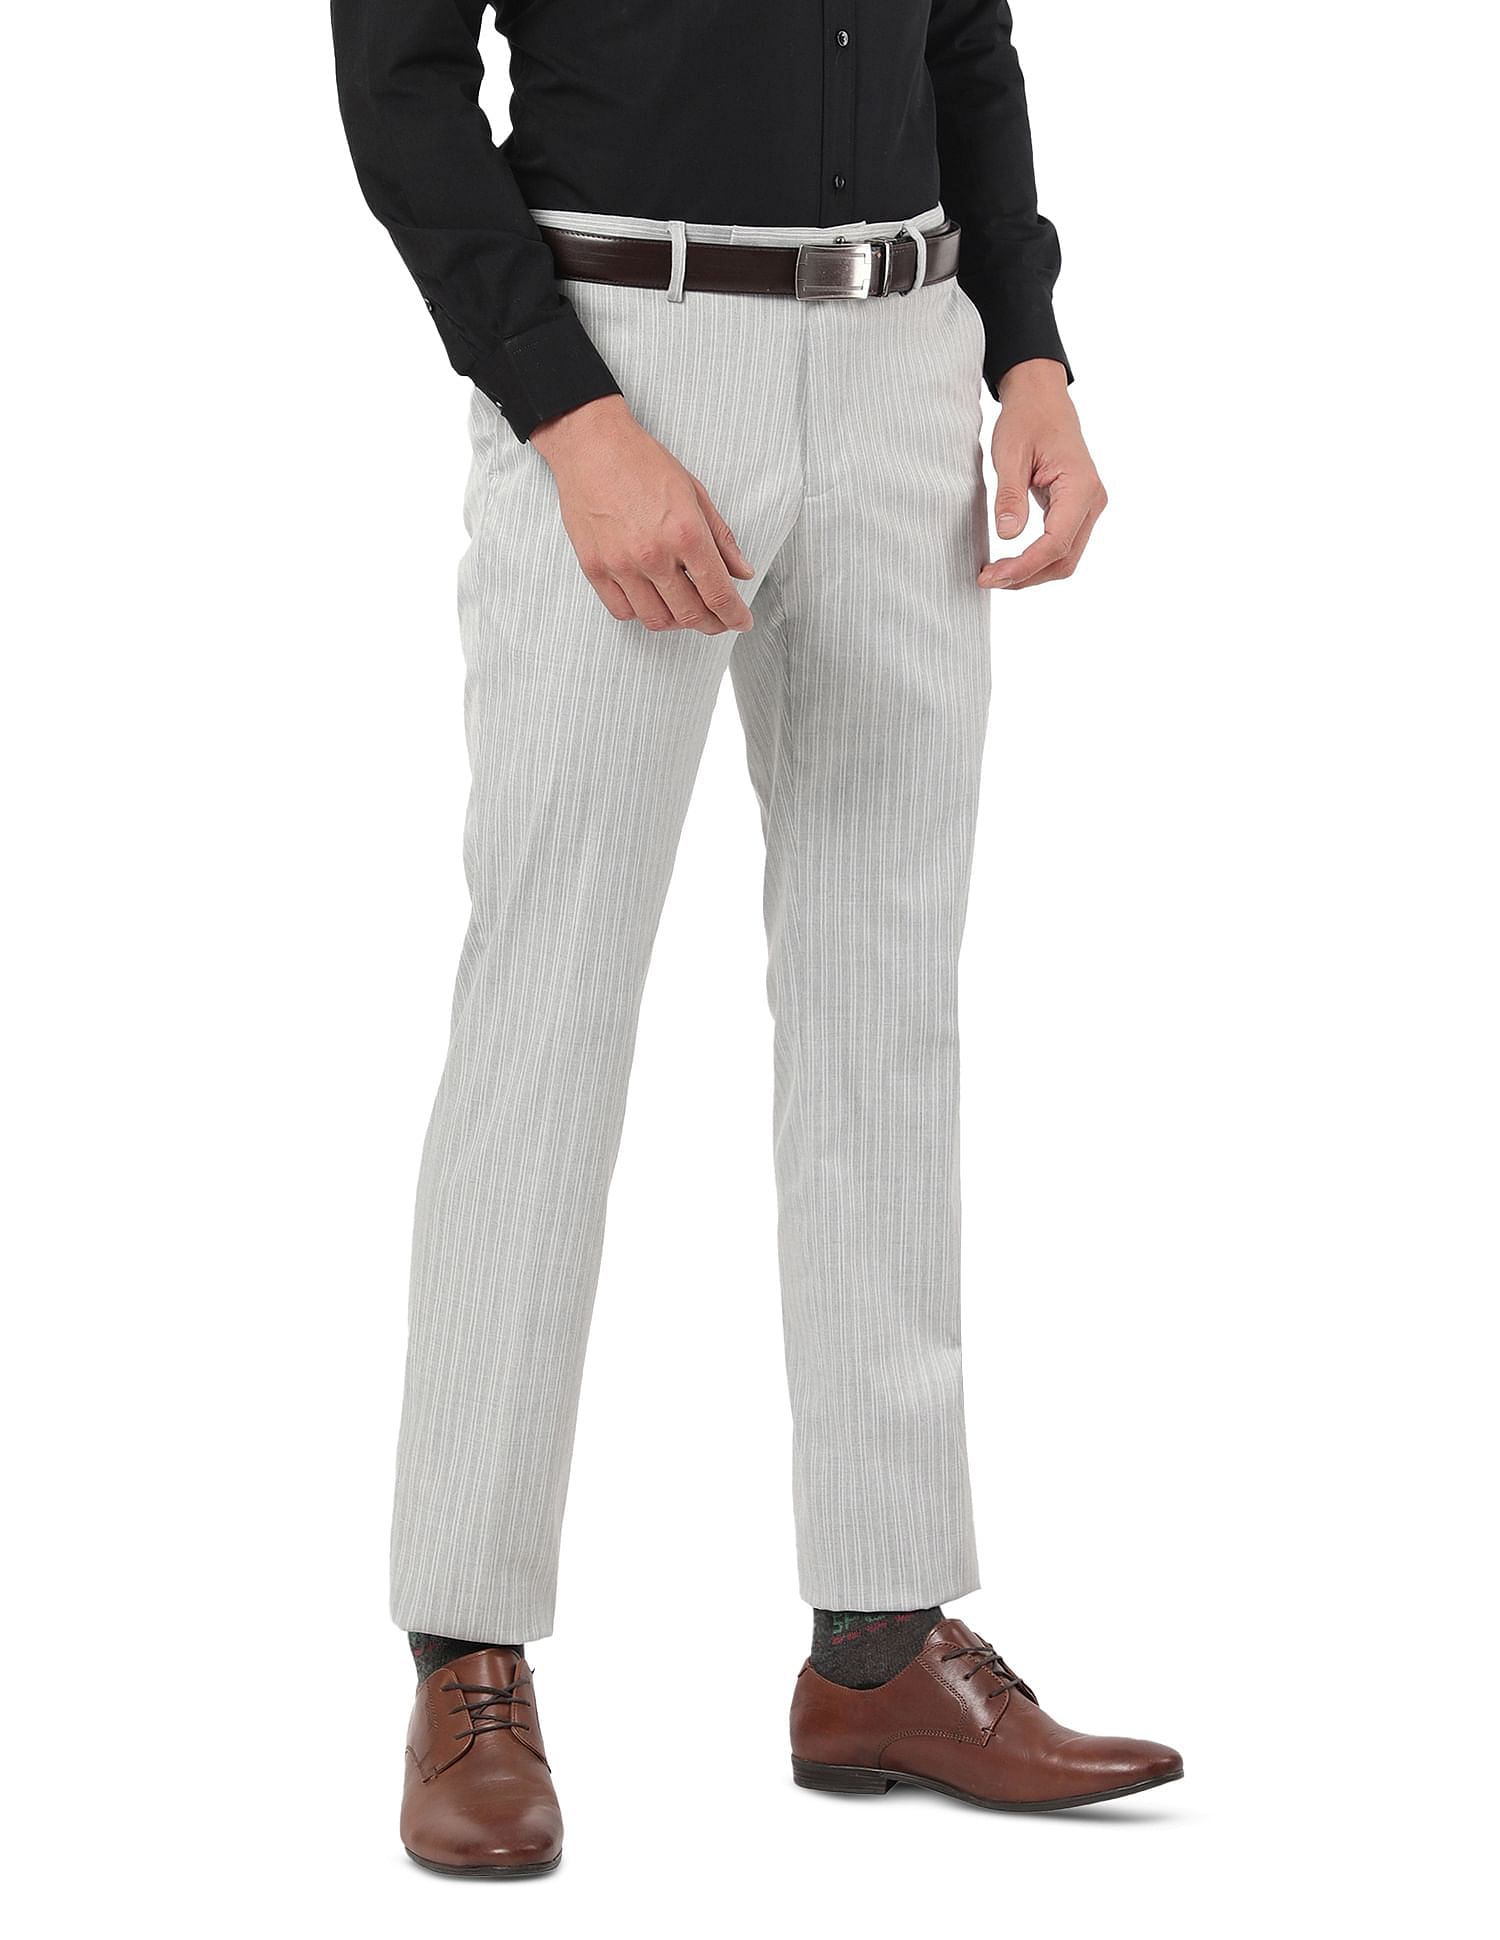 ALDYYJDM Mens Formal Pant Ankle Pants Men High Waist Straight Pants Men  Social Trousers Pant Color  A Size  32code price in UAE  Amazon UAE   kanbkam